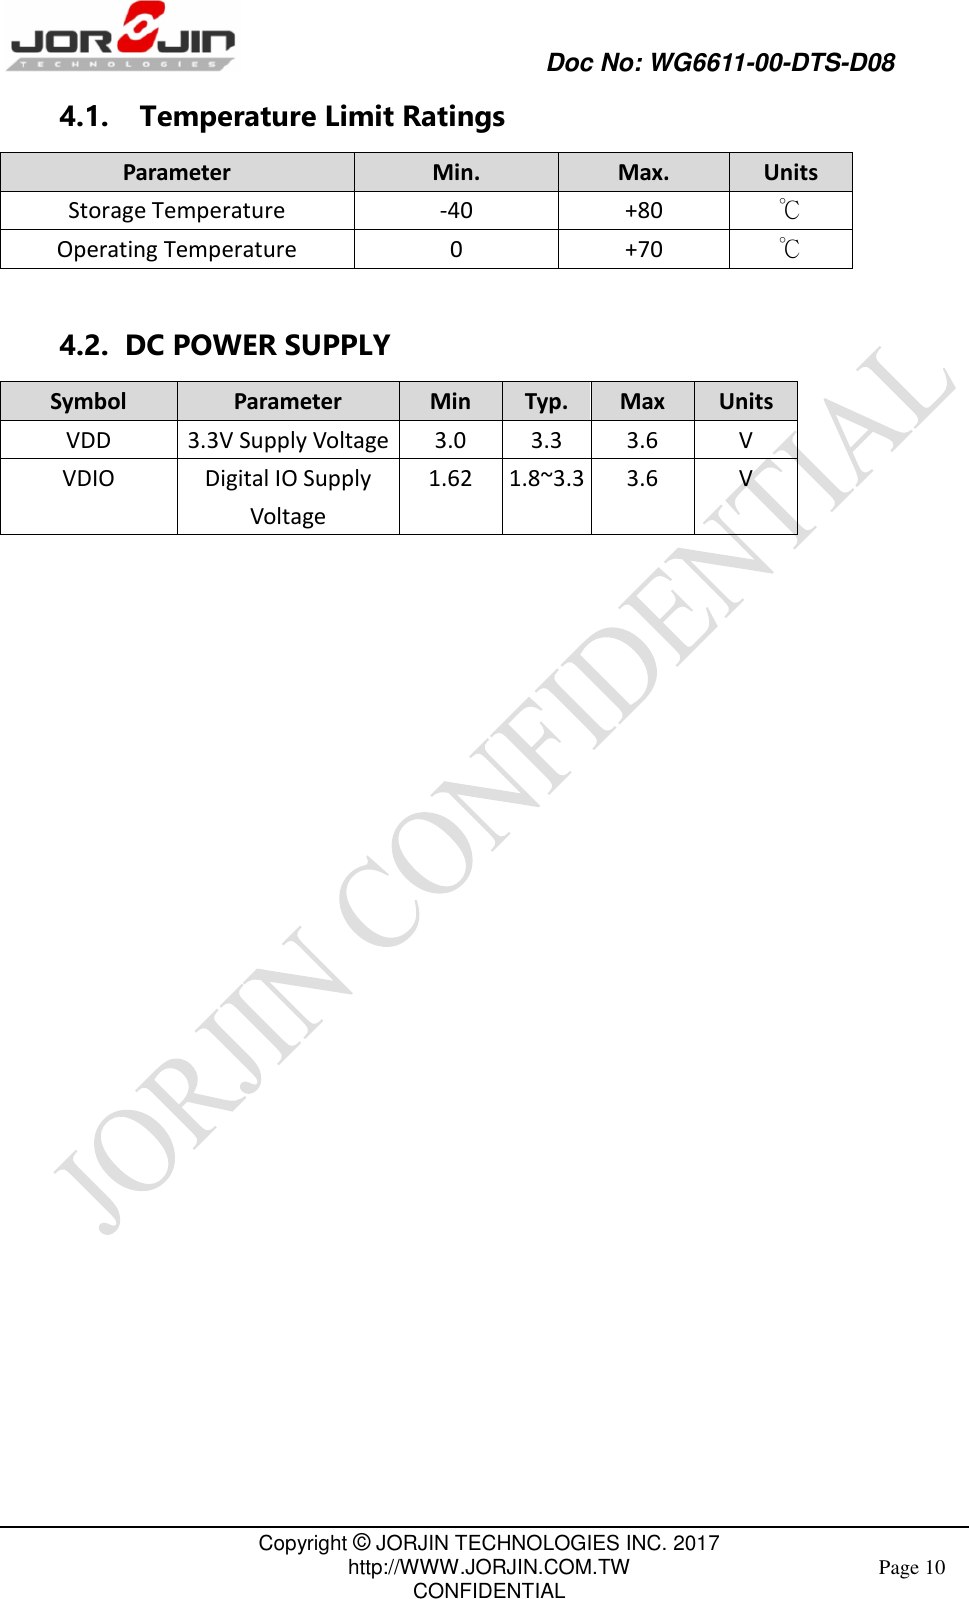             Doc No: WG6611-00-DTS-D08                                                                                               Copyright © JORJIN TECHNOLOGIES INC. 2017 http://WWW.JORJIN.COM.TW CONFIDENTIAL Page 10 4.1.   Temperature Limit Ratings Parameter Min. Max. Units Storage Temperature -40 +80 ℃ Operating Temperature 0 +70 ℃  4.2.  DC POWER SUPPLY Symbol Parameter Min Typ. Max Units VDD 3.3V Supply Voltage 3.0 3.3 3.6 V VDIO Digital IO Supply Voltage 1.62 1.8~3.3 3.6 V                        